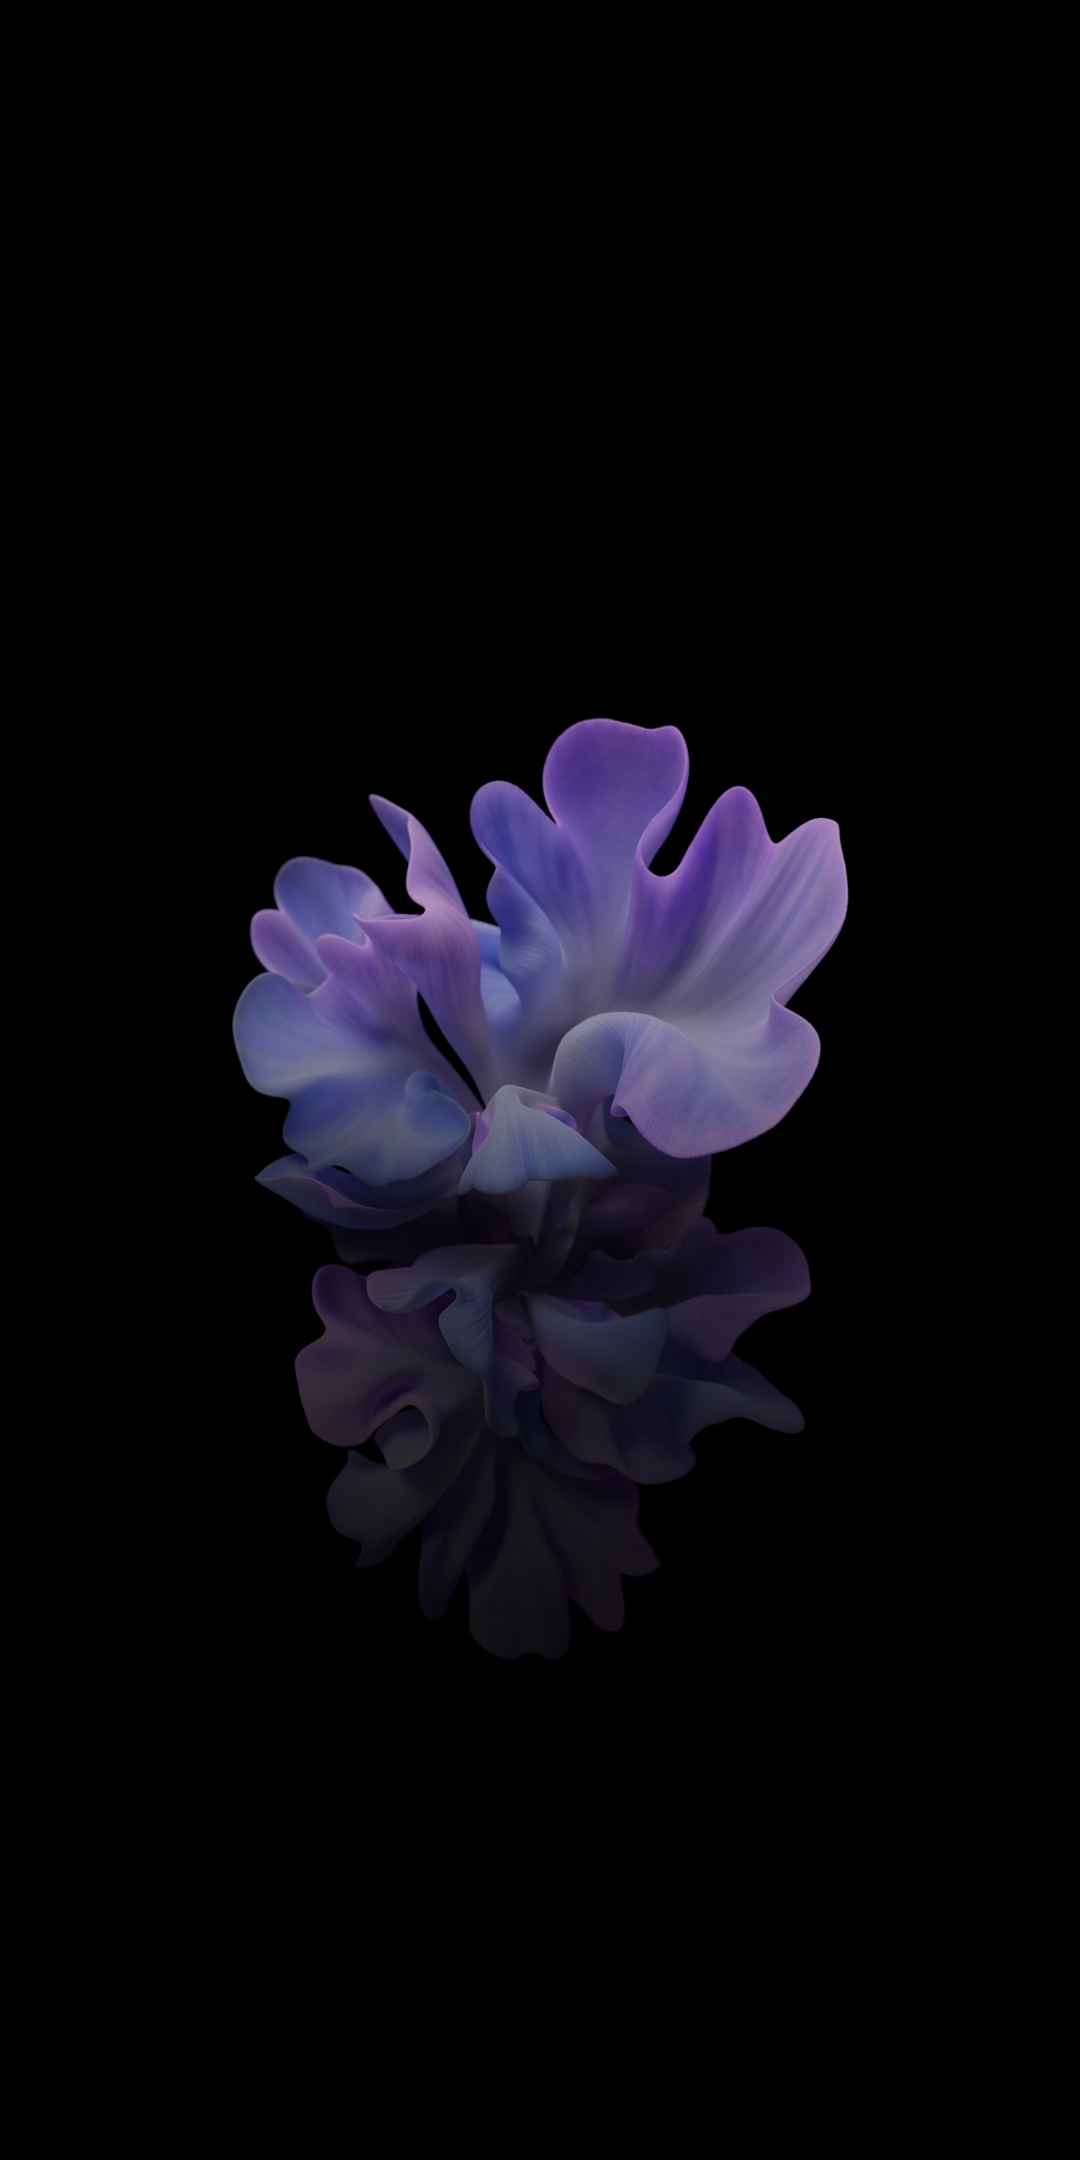 Flower, light-blue, dark, 1080x2160 wallpaper